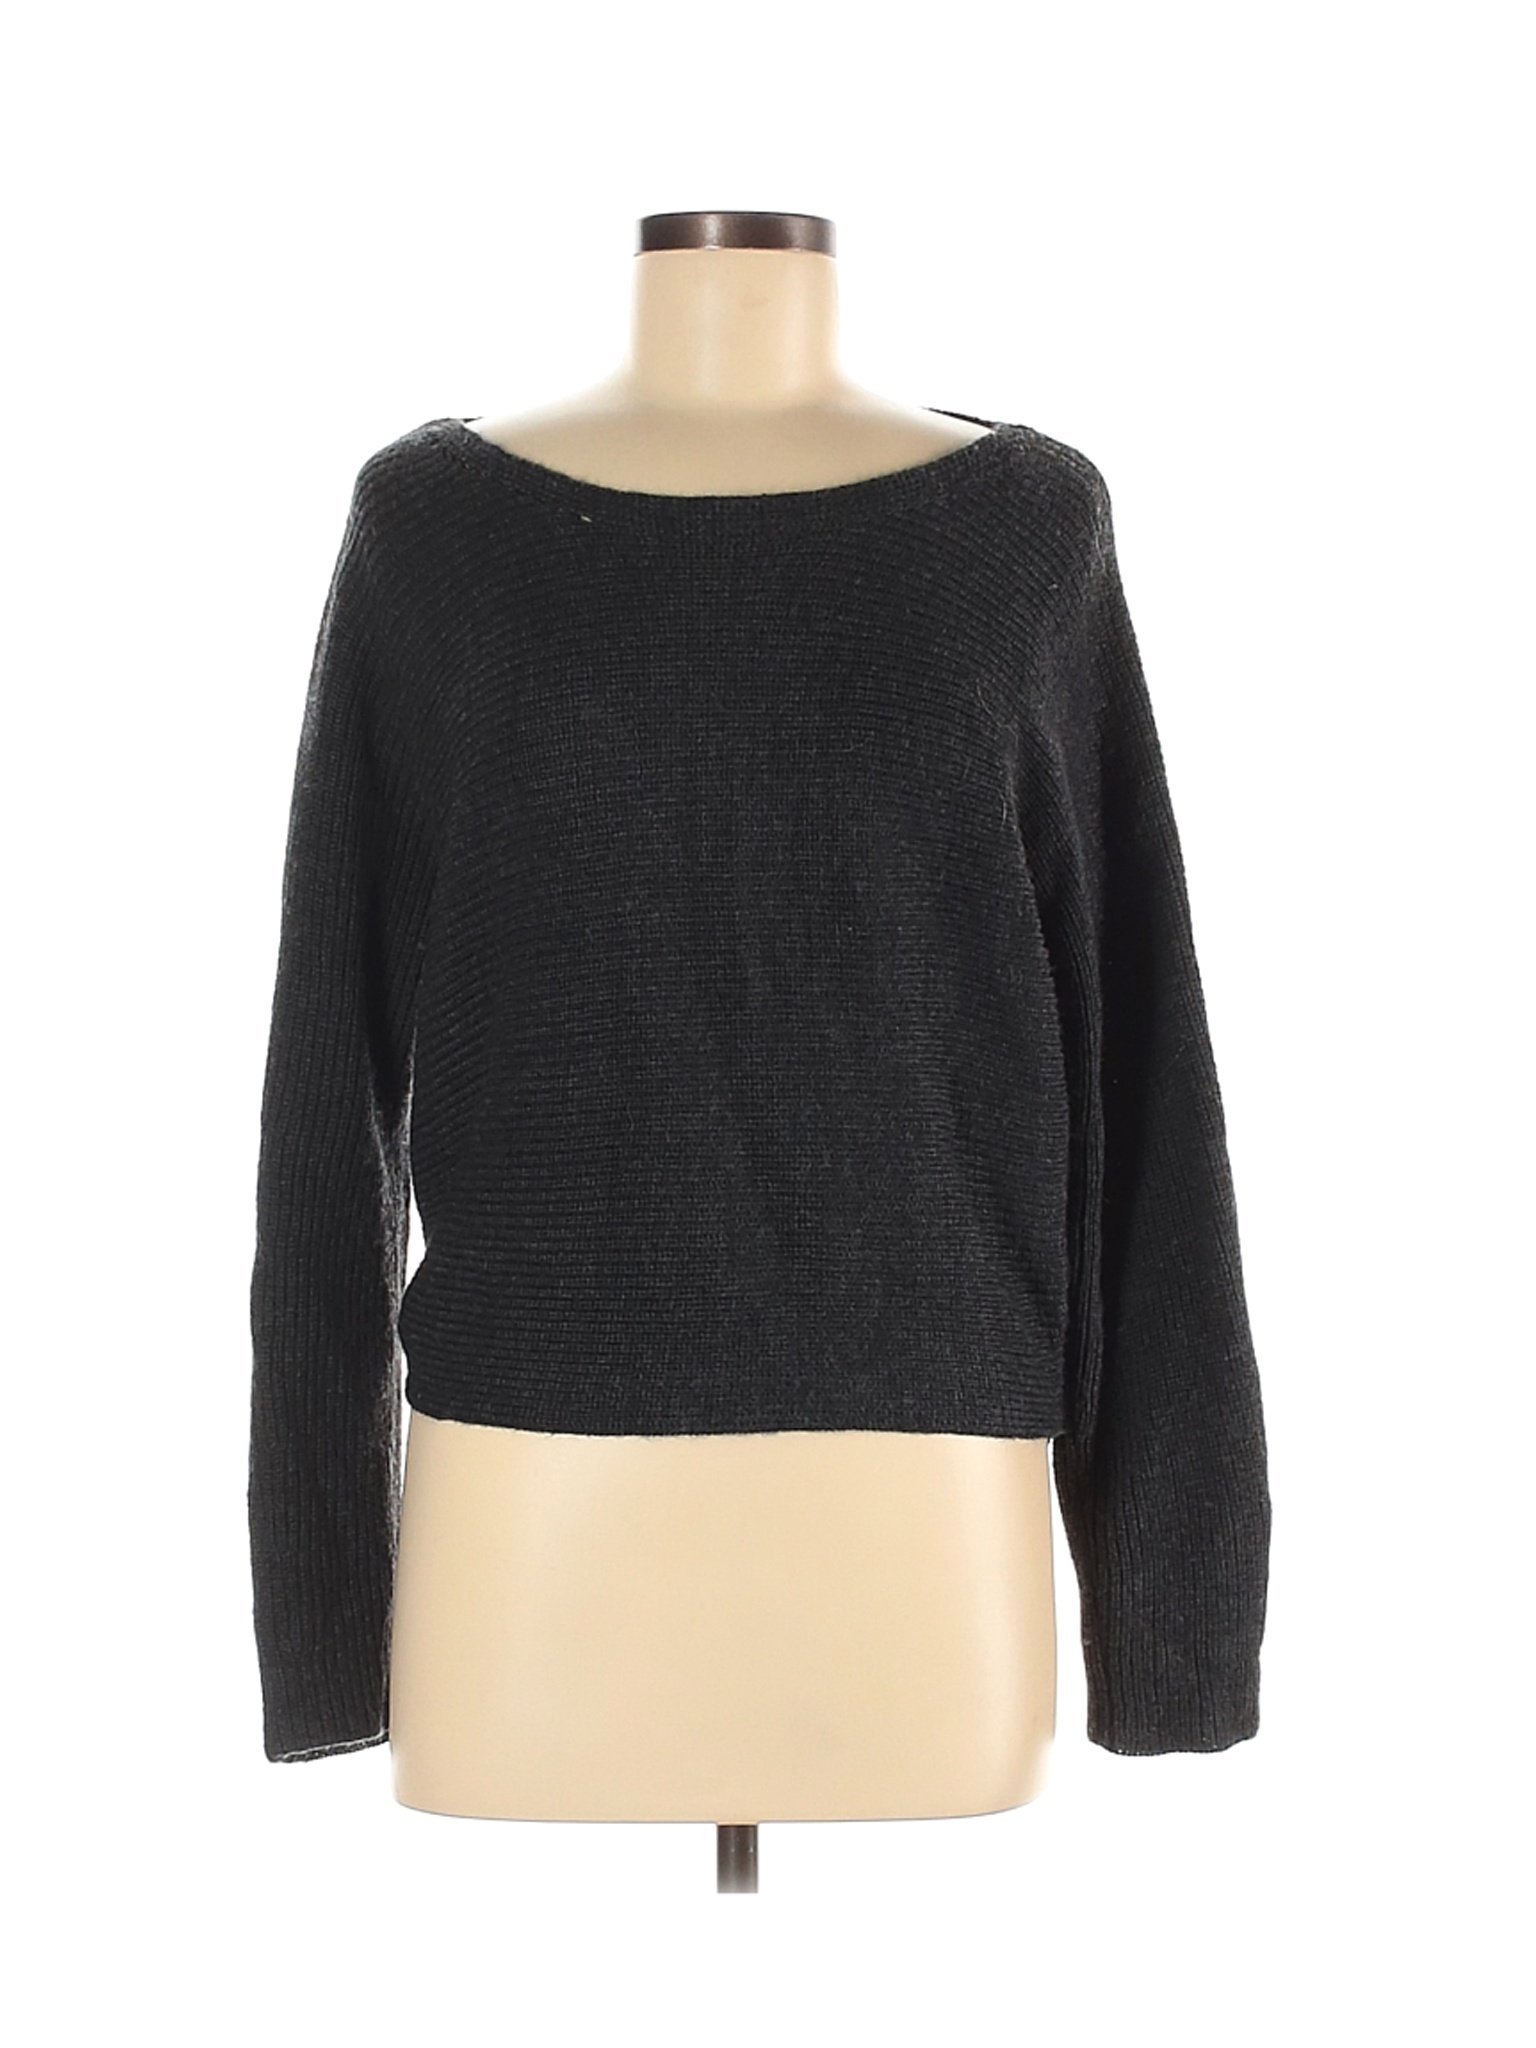 Tahari Women Black Wool Pullover Sweater M | eBay